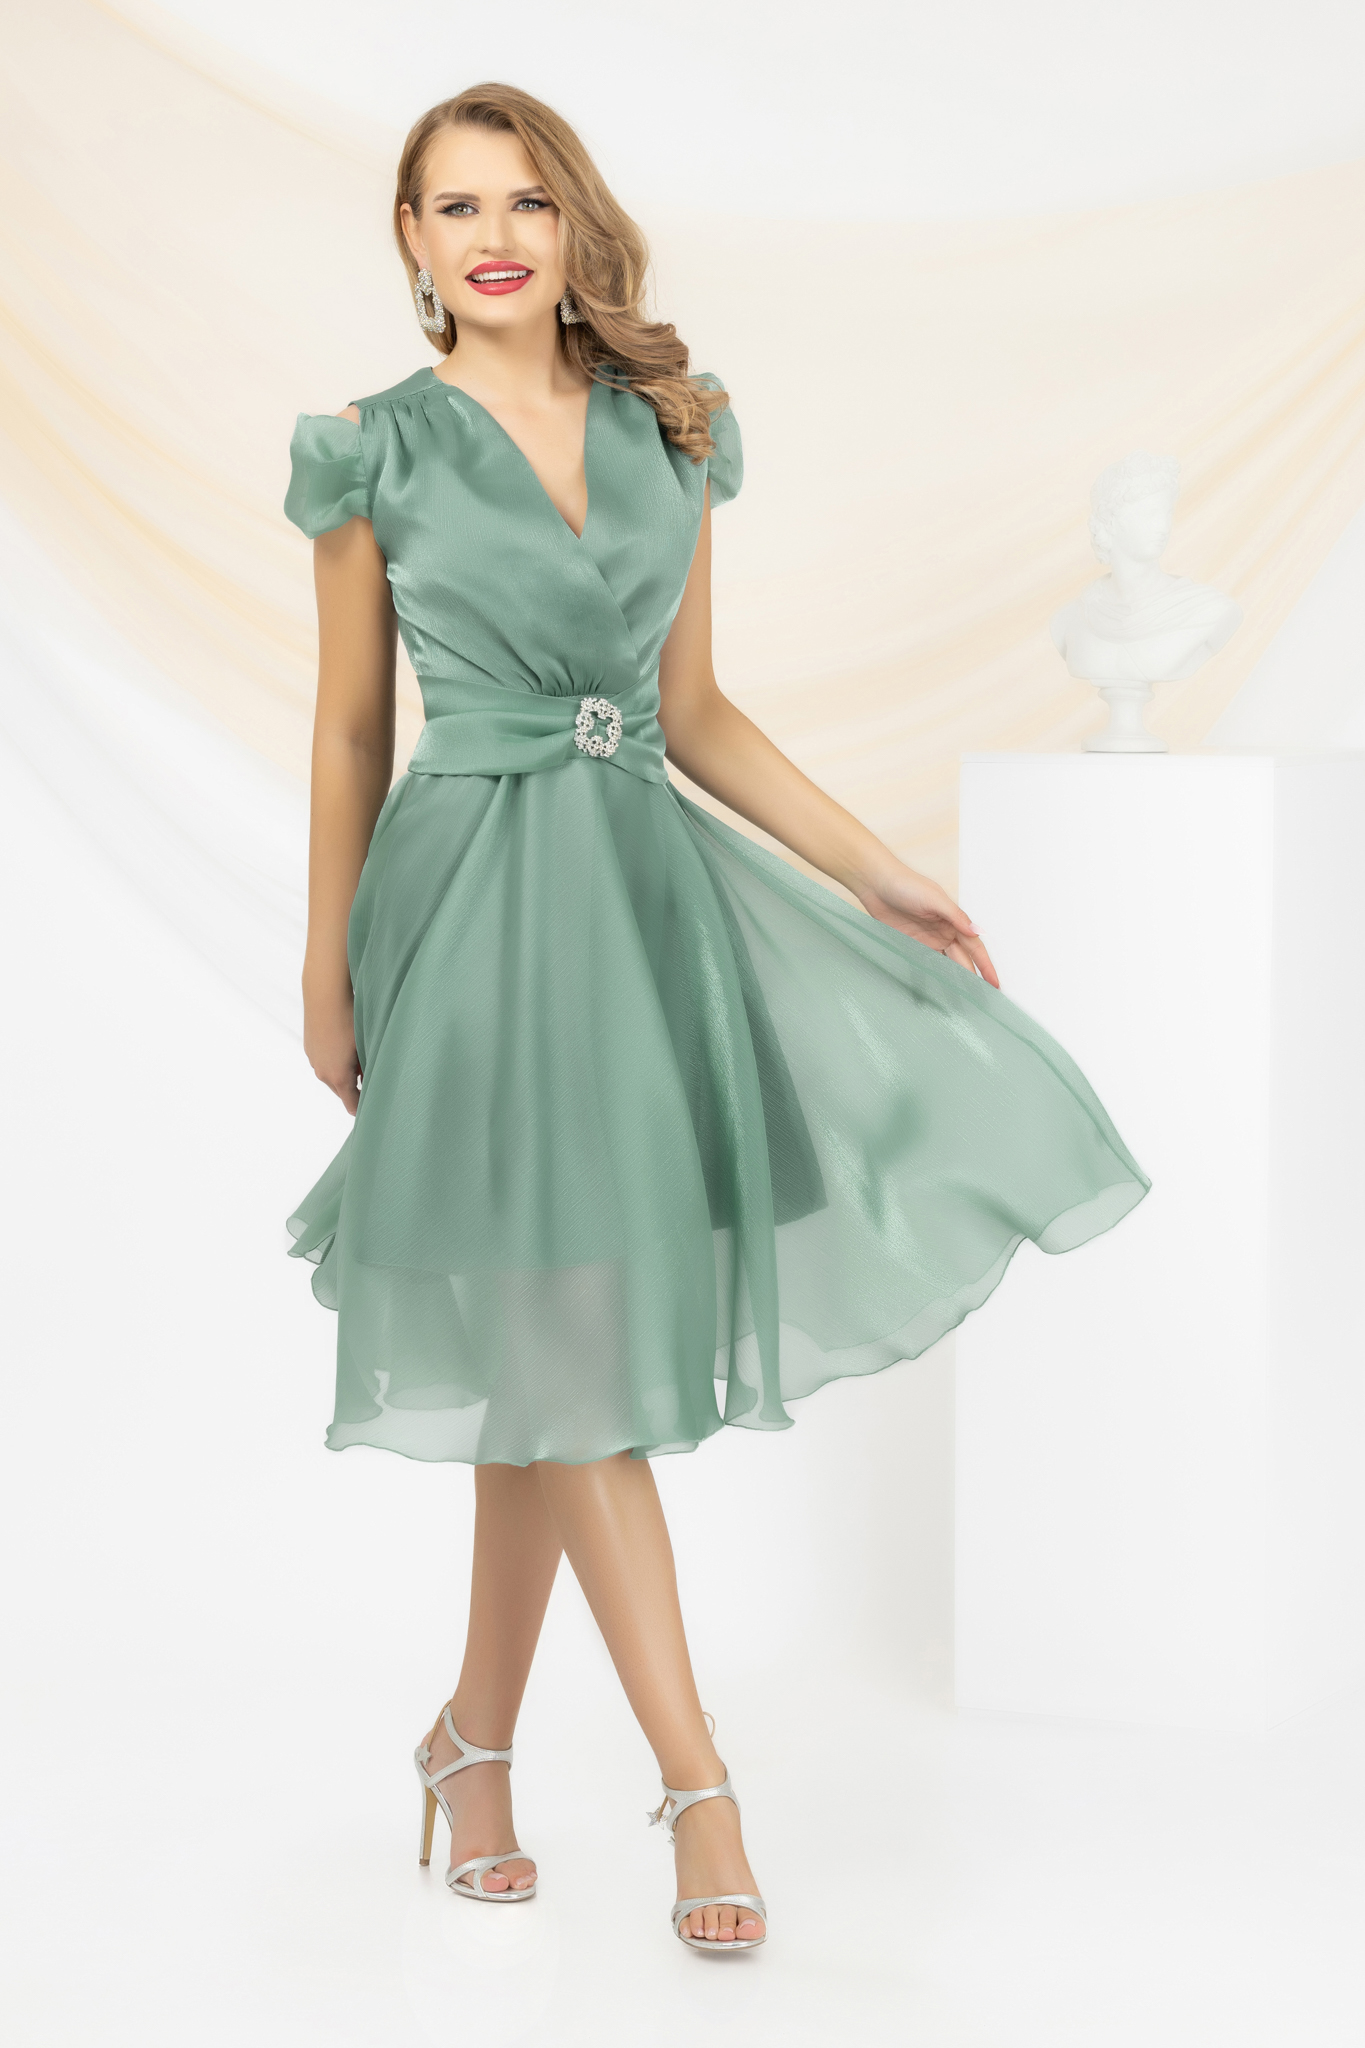 Mint Veil Dress in a Flared Cut Adorned with a Rhinestone Belt - PrettyGirl